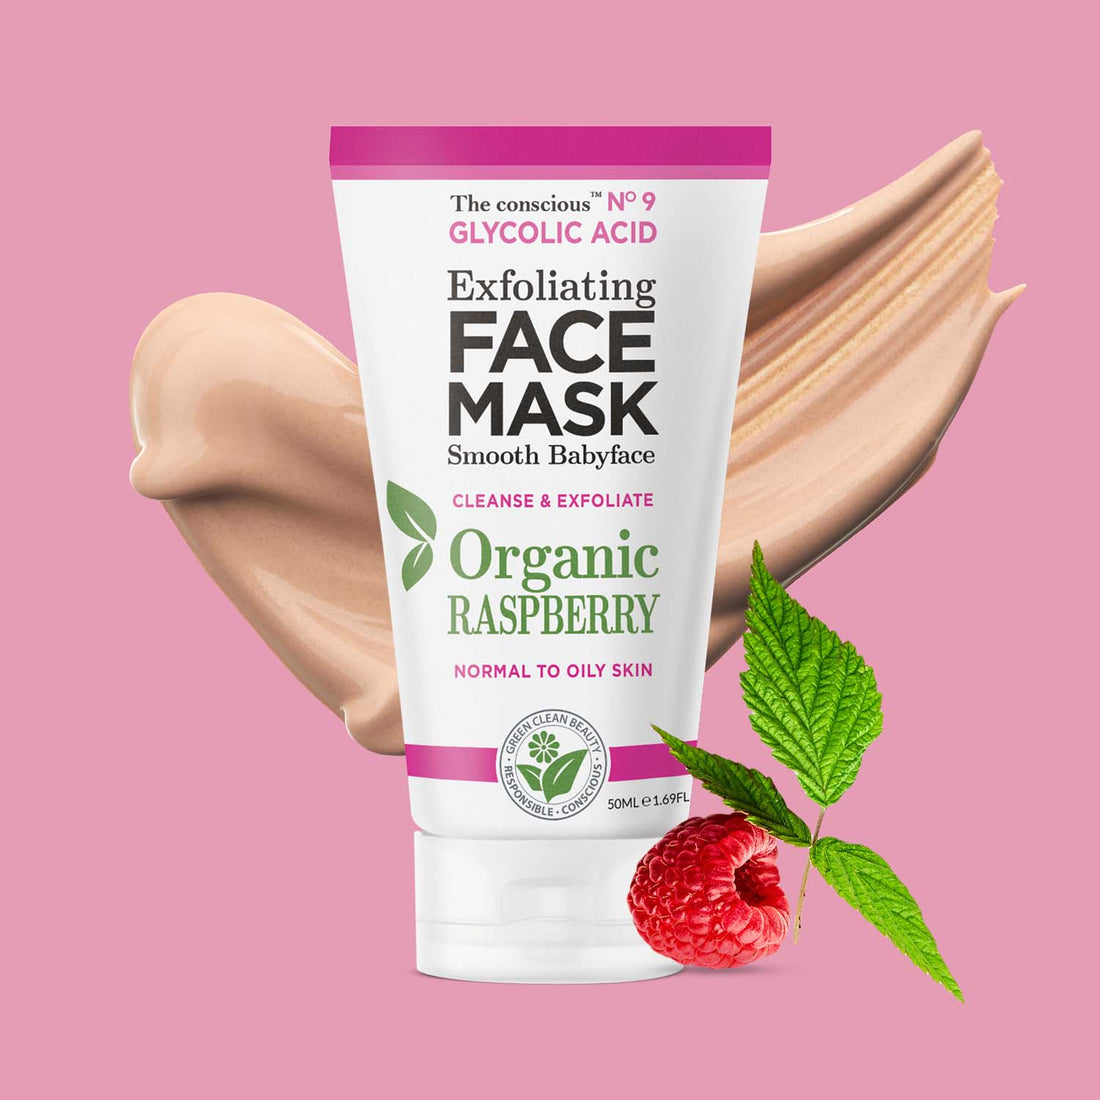 The conscious™ Glycolic Acid Exfoliating Face Mask Organic Raspberry